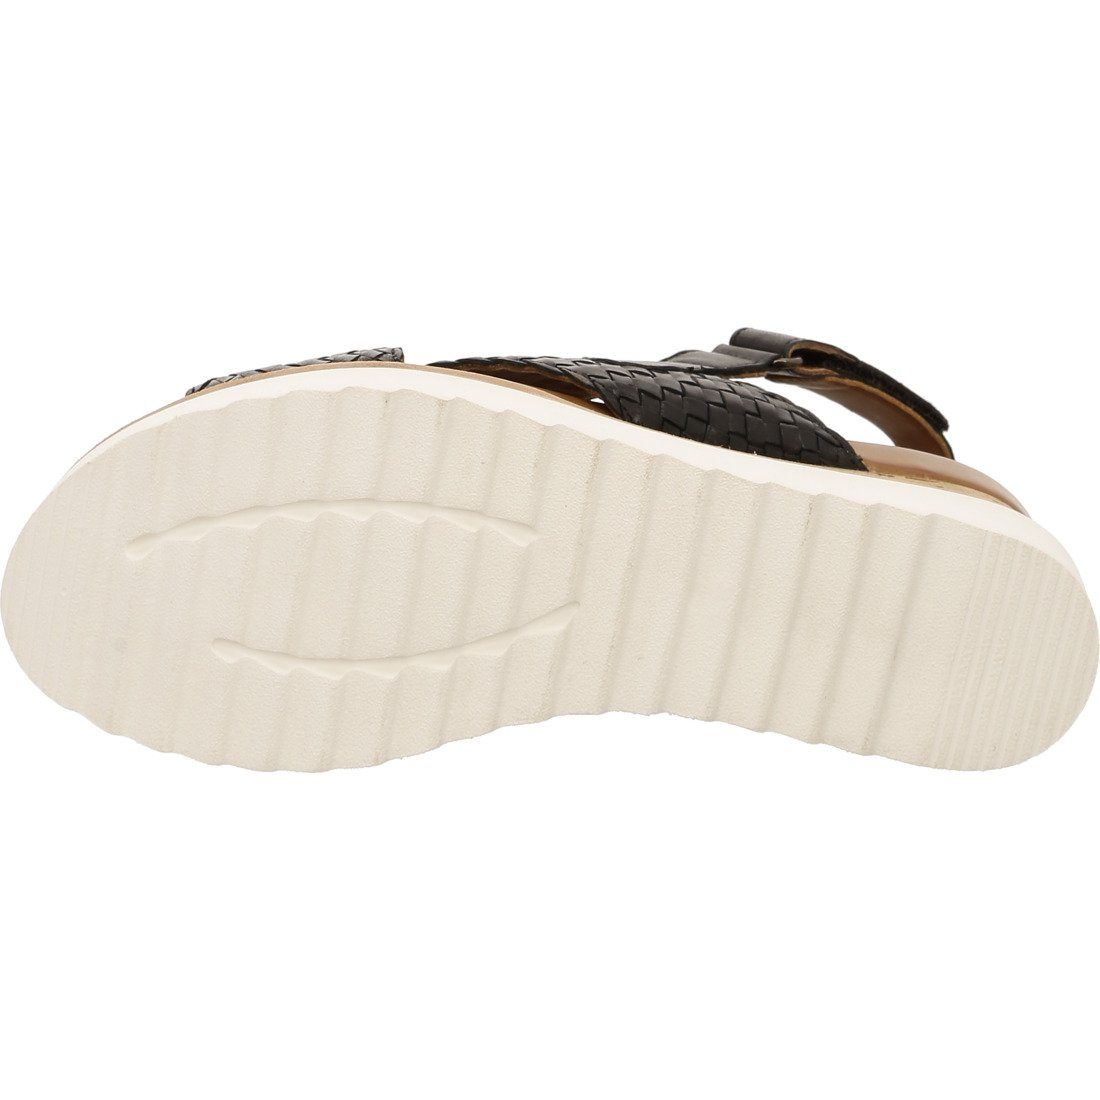 - Damen Schuhe, Sandalette Sandalette schwarz Leder Valencia Ara 045300 Ara